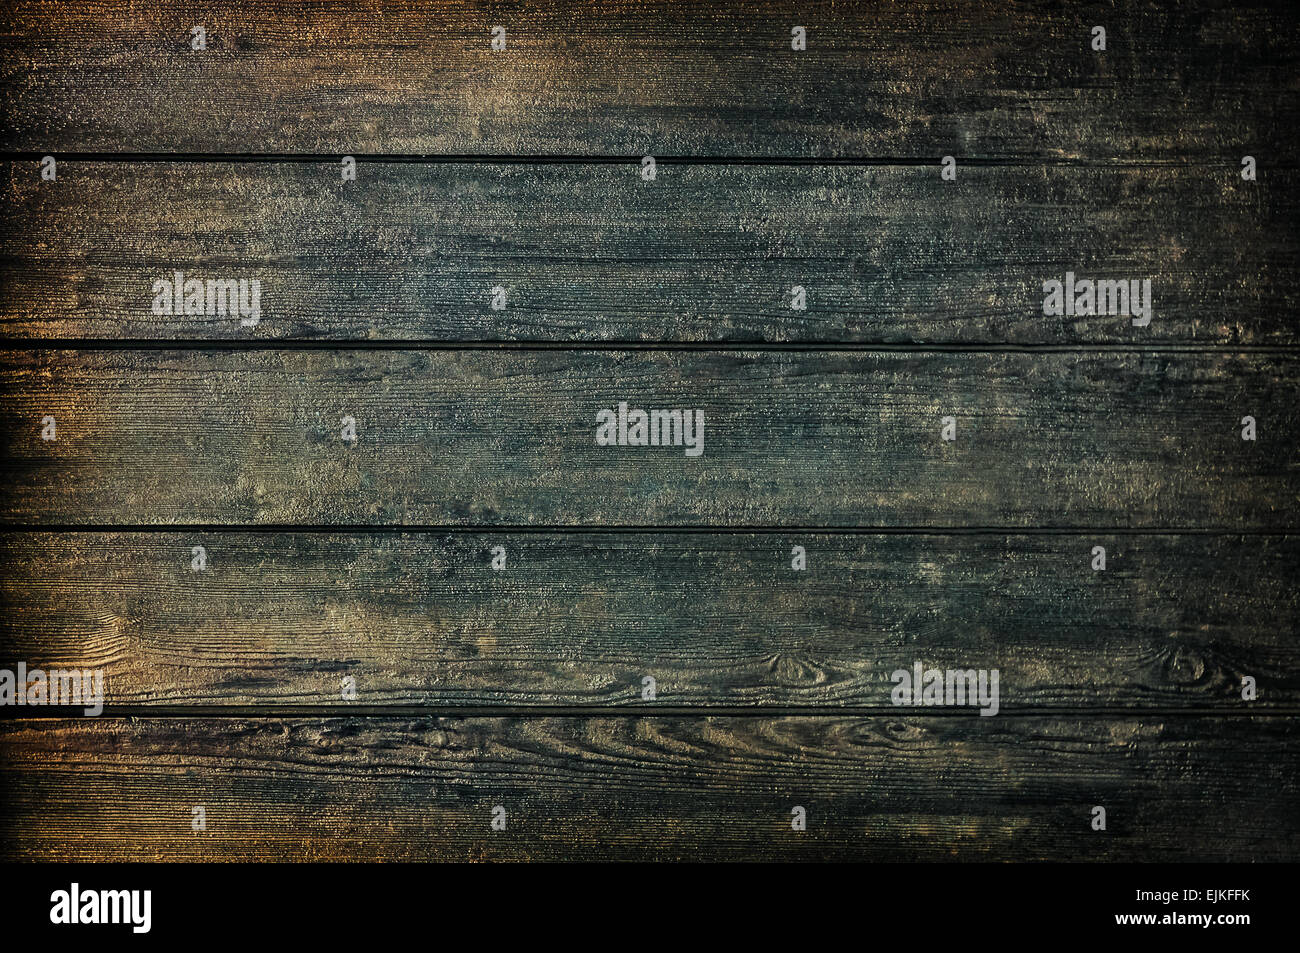 Grunge dark wood texture or background shimmer Stock Photo